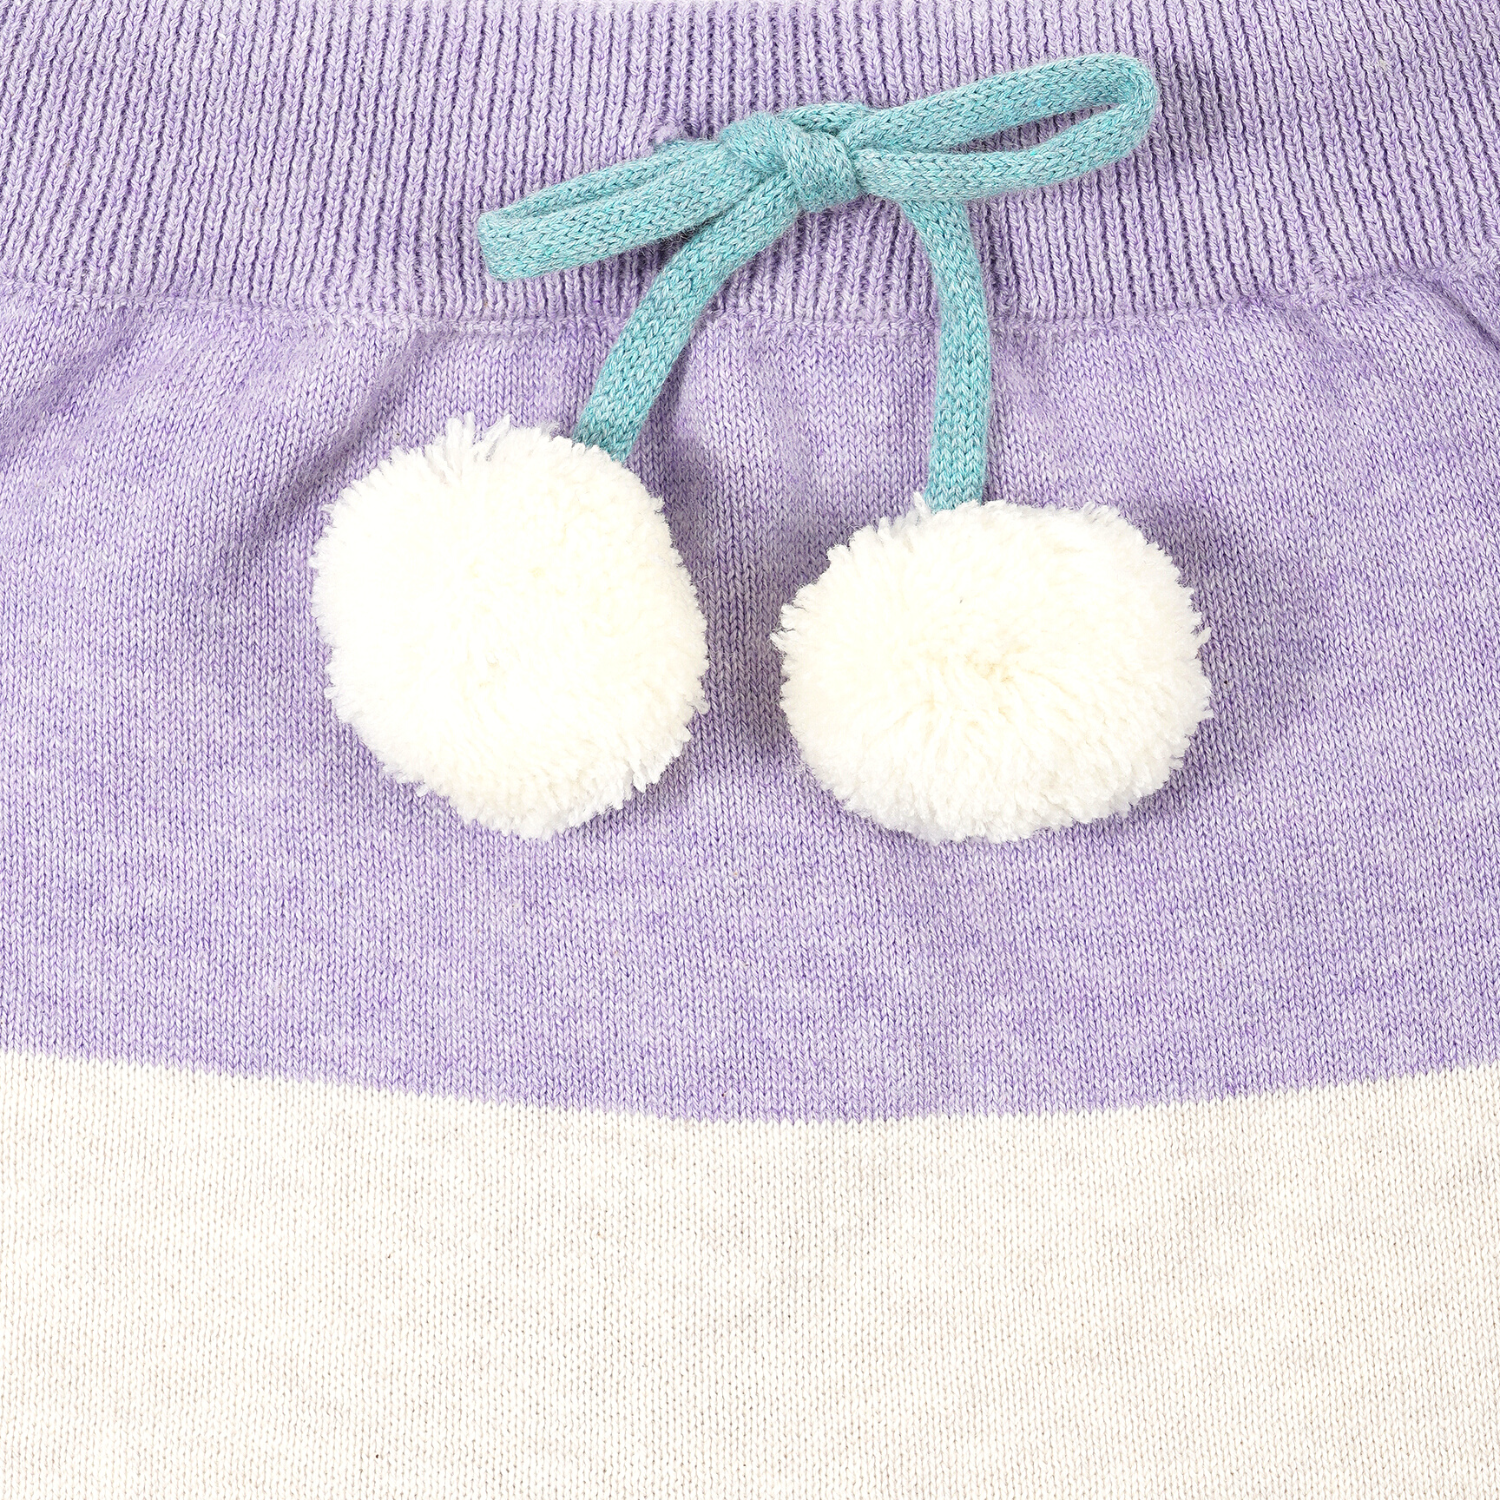 Lavender Love Sweater Set